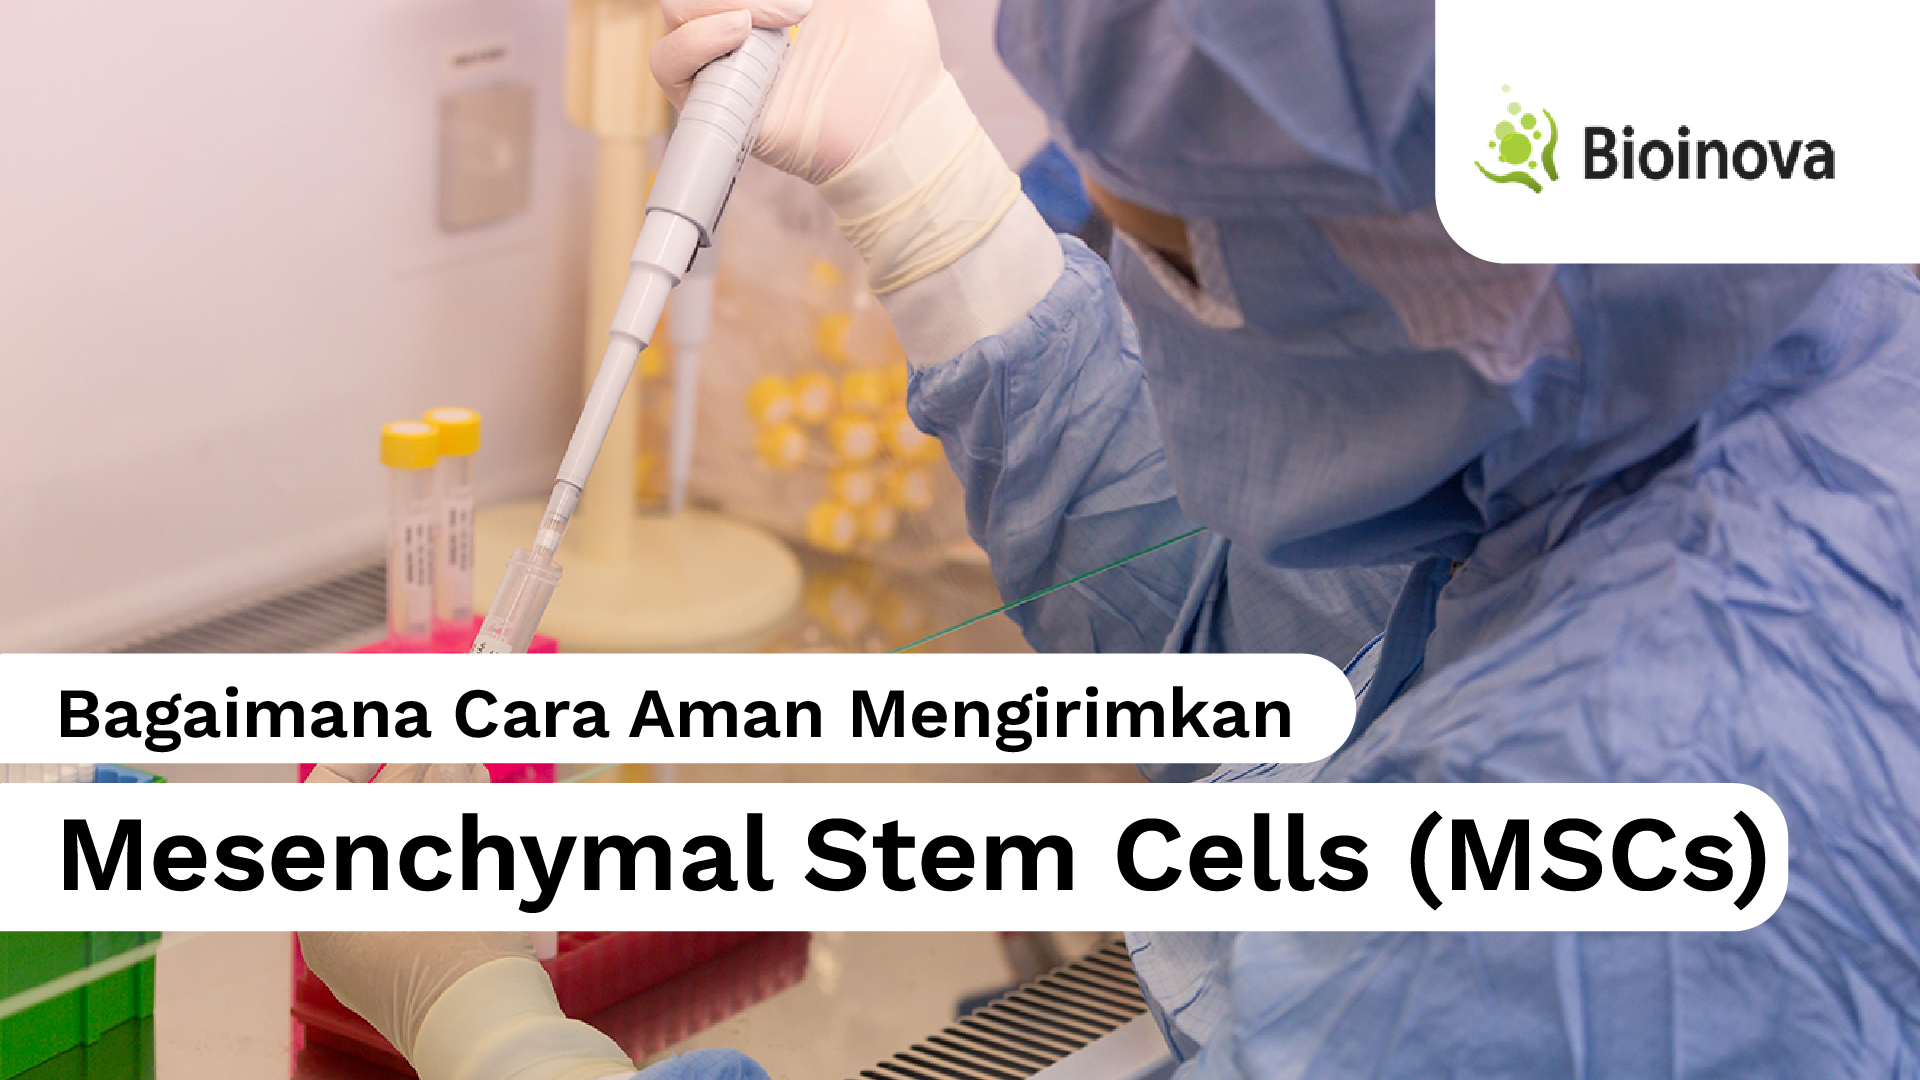 Mengirimkan Mesenchymal Stem Cells (MSCs)